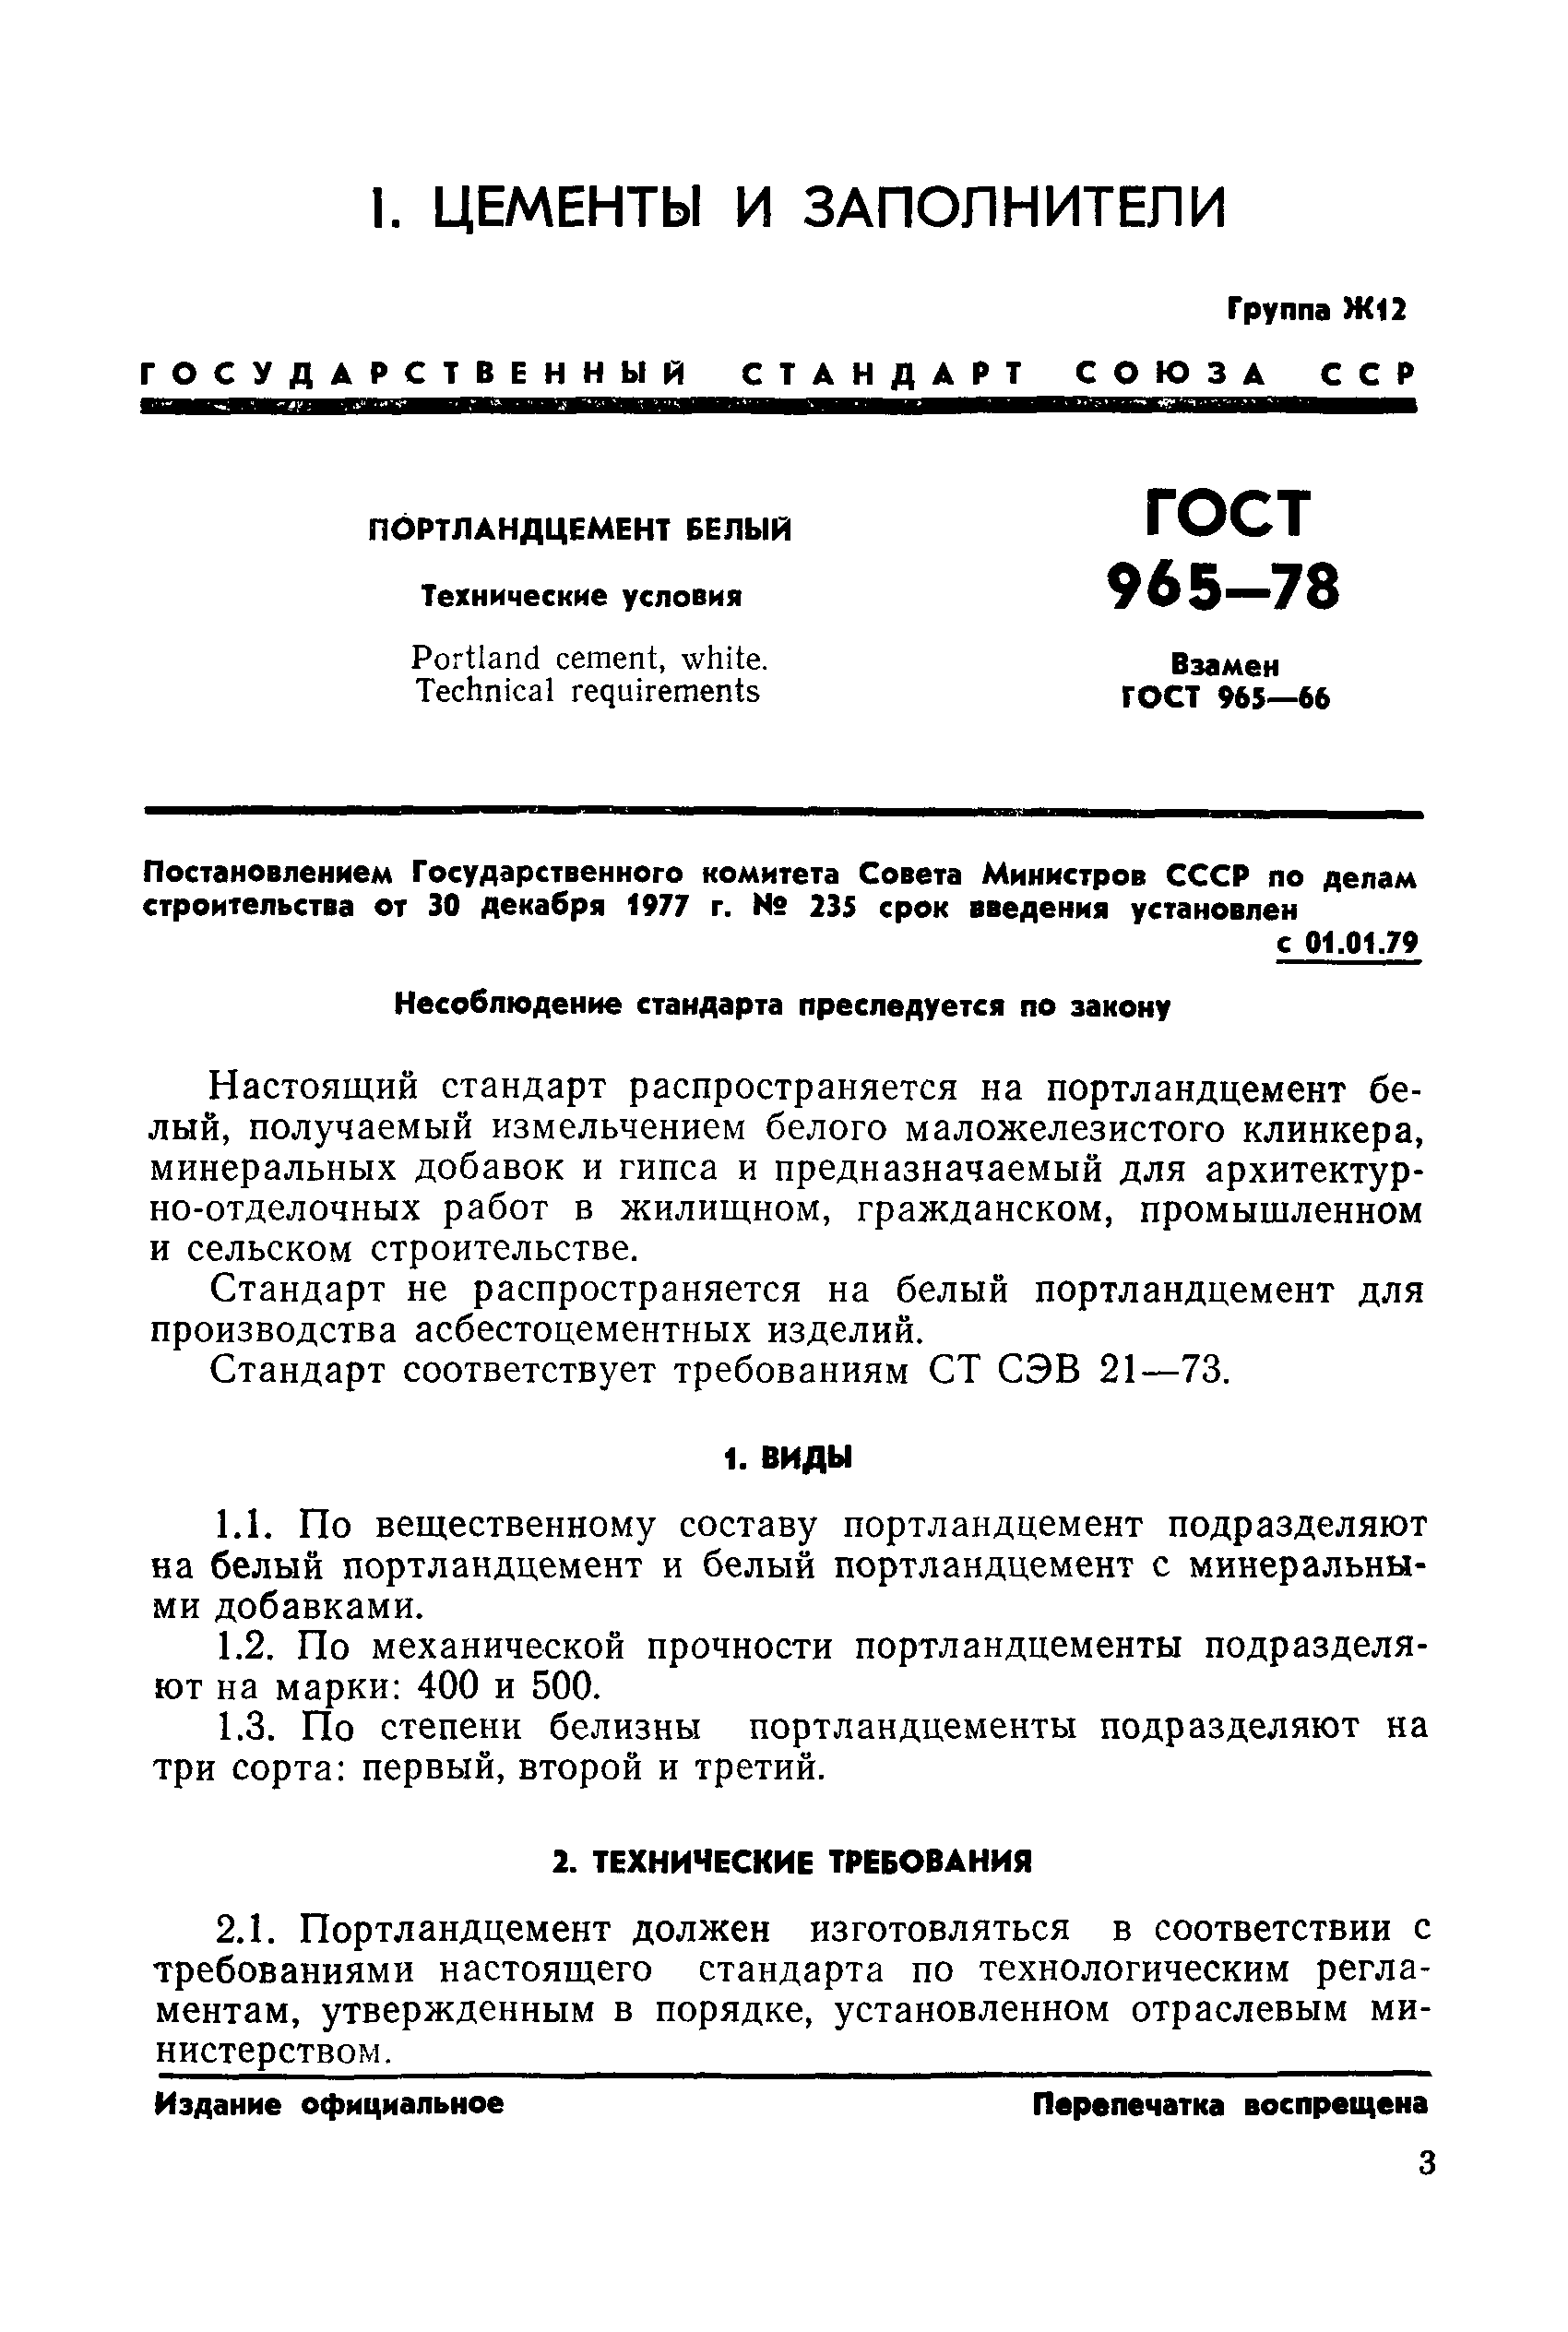 ГОСТ 965-78